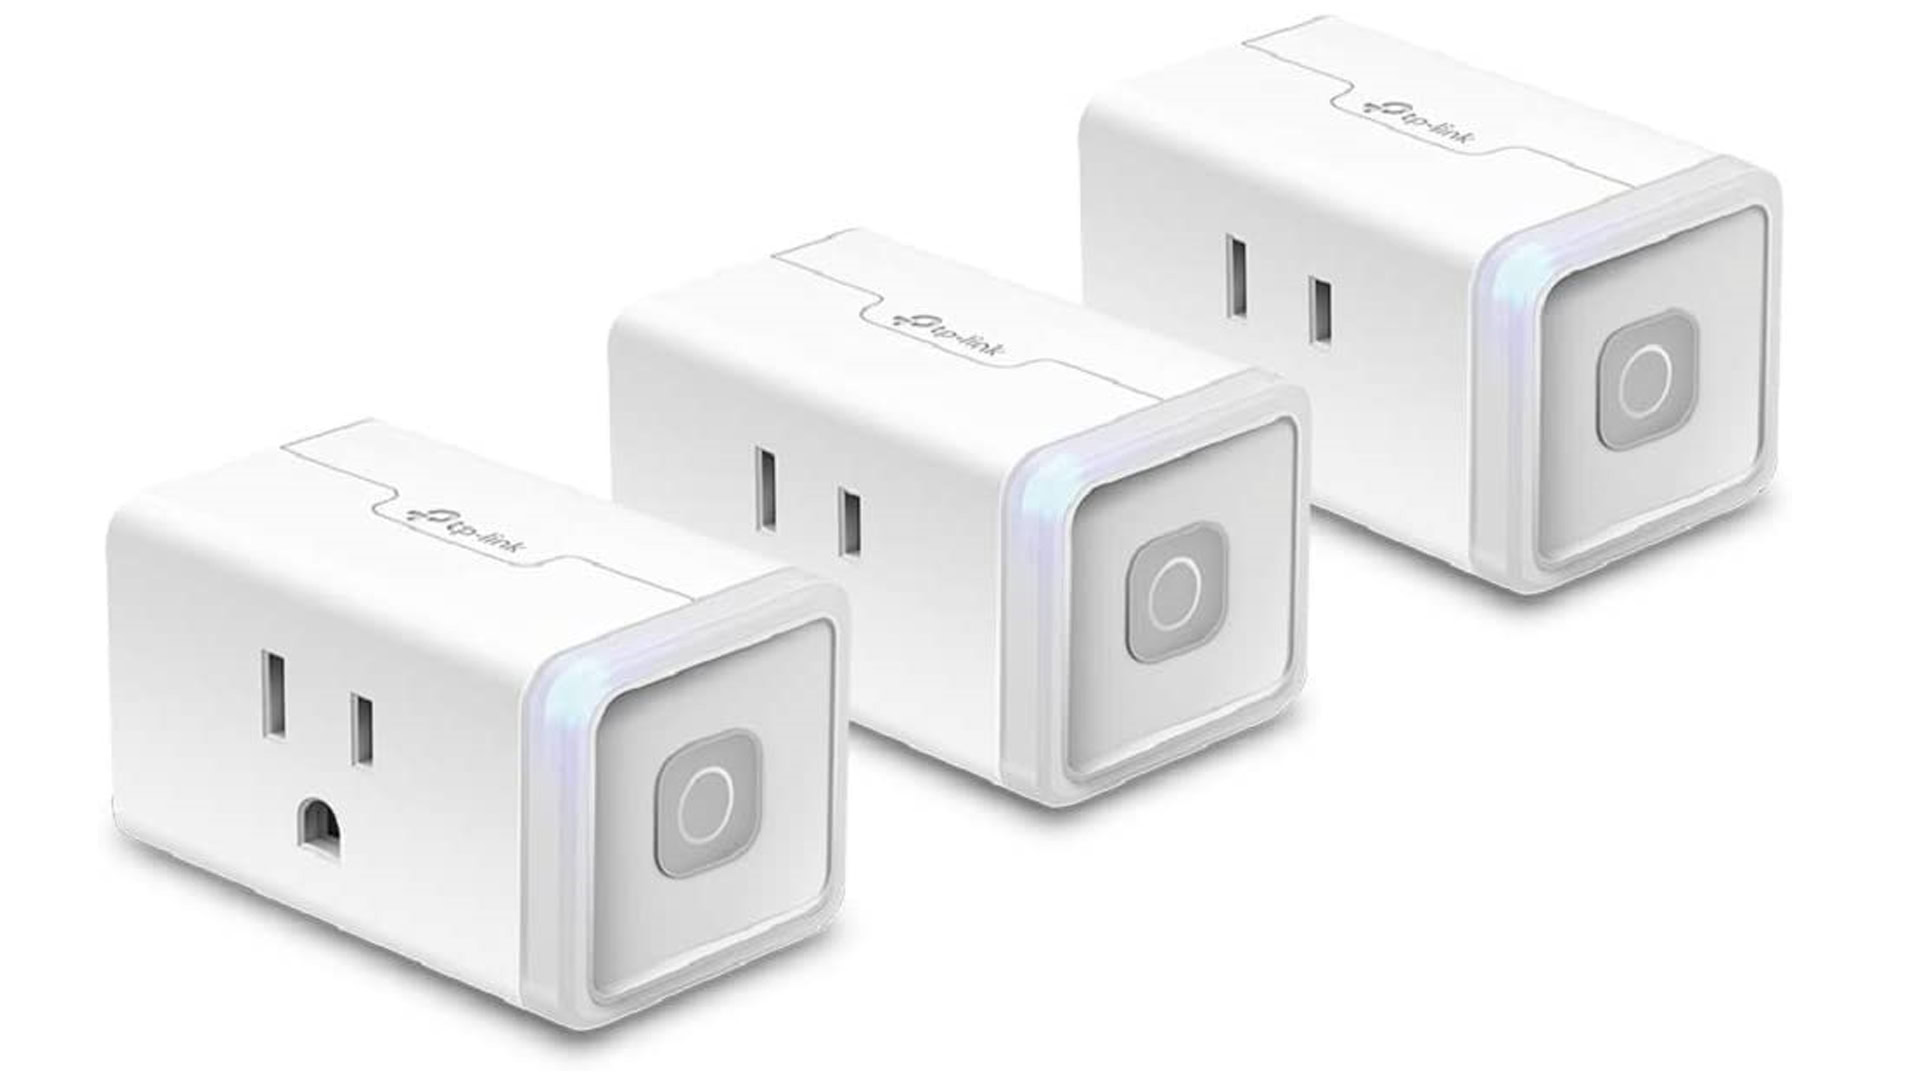 Three Kasa smart plugs